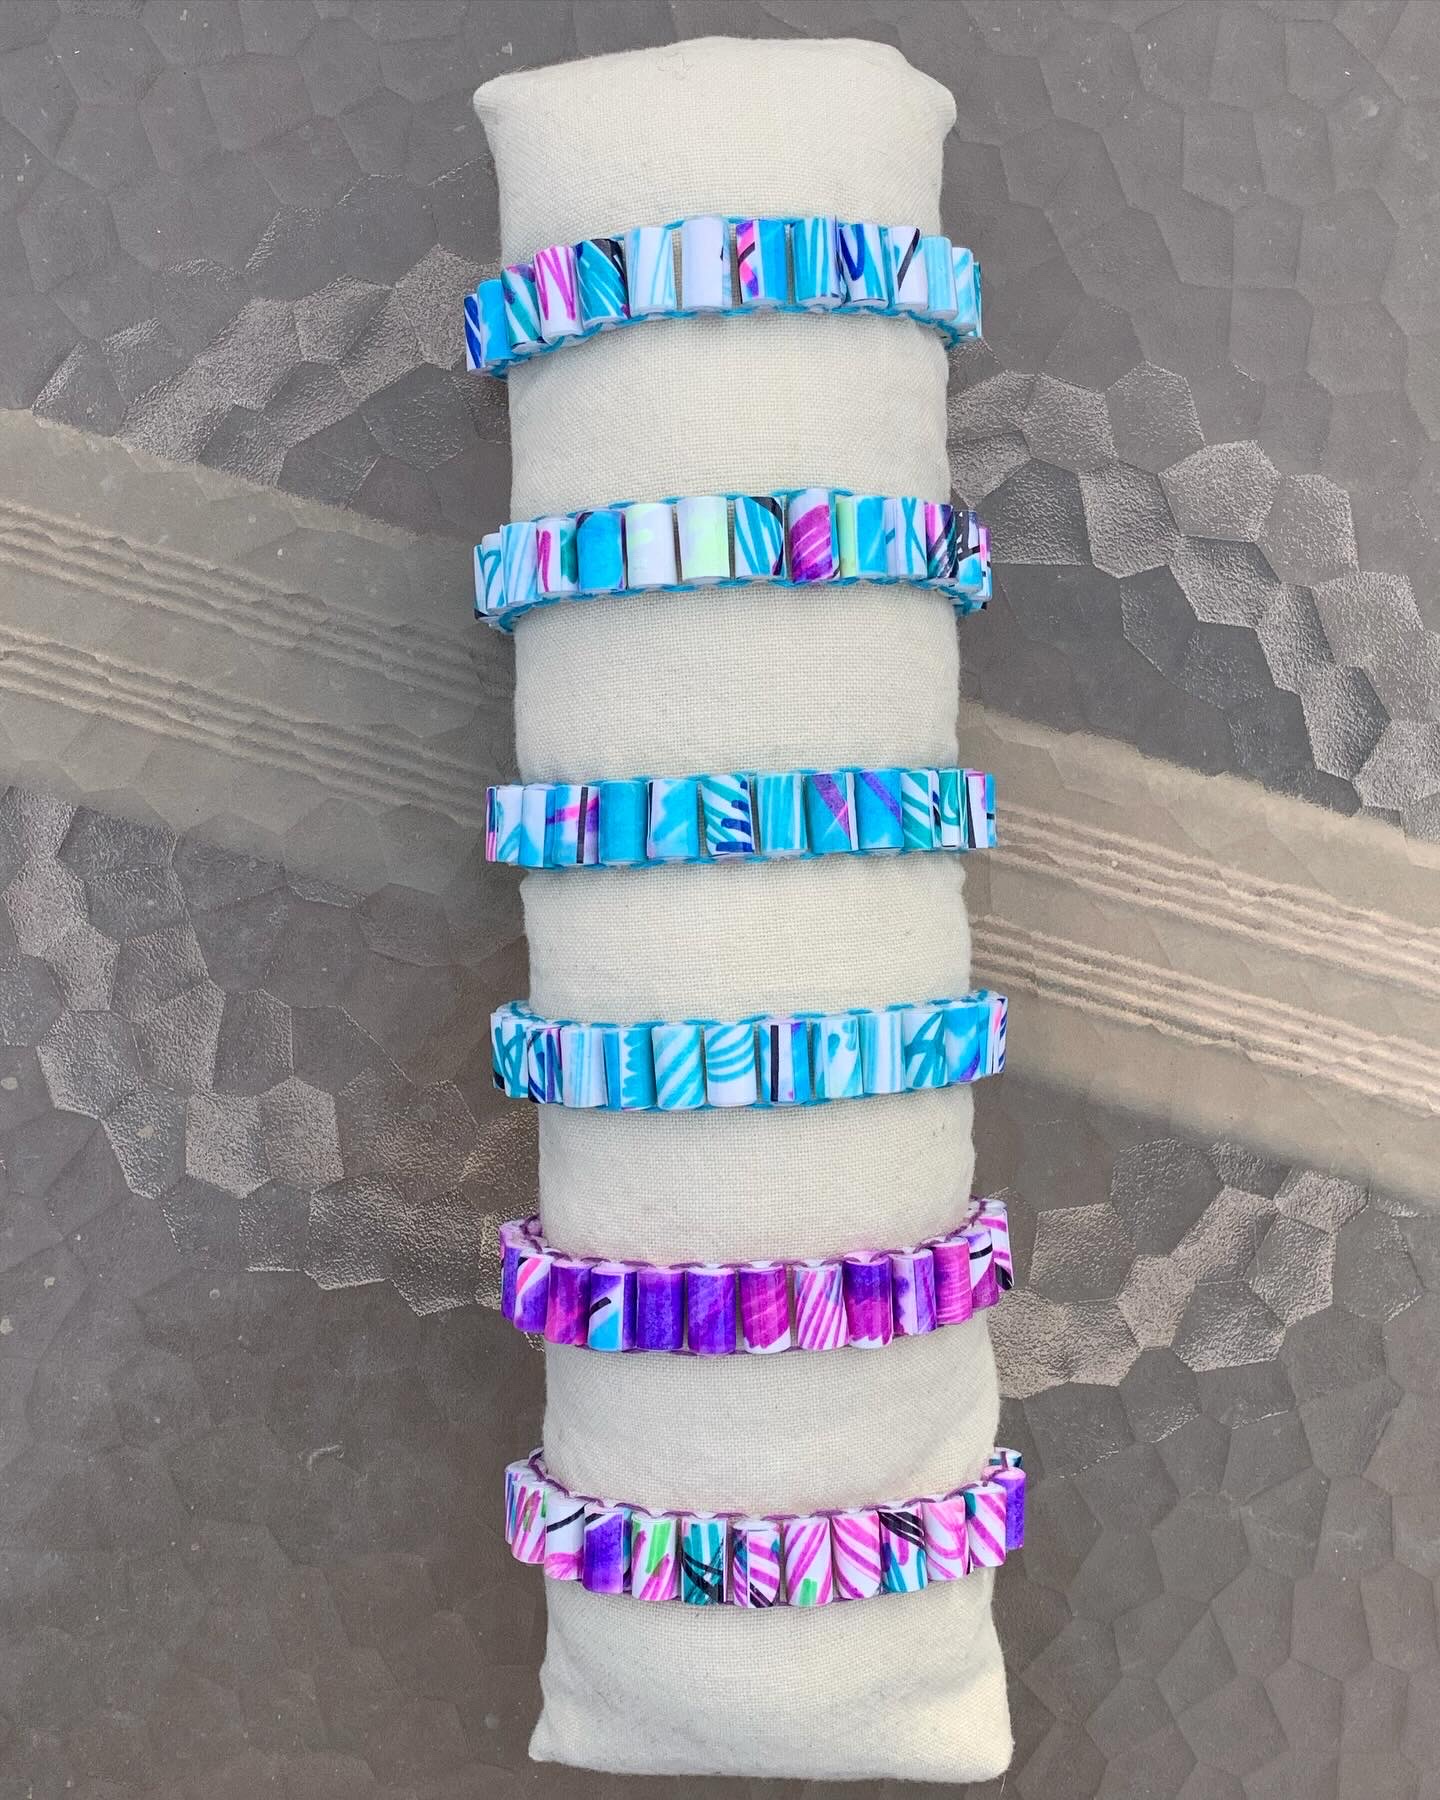 six bracelets on display